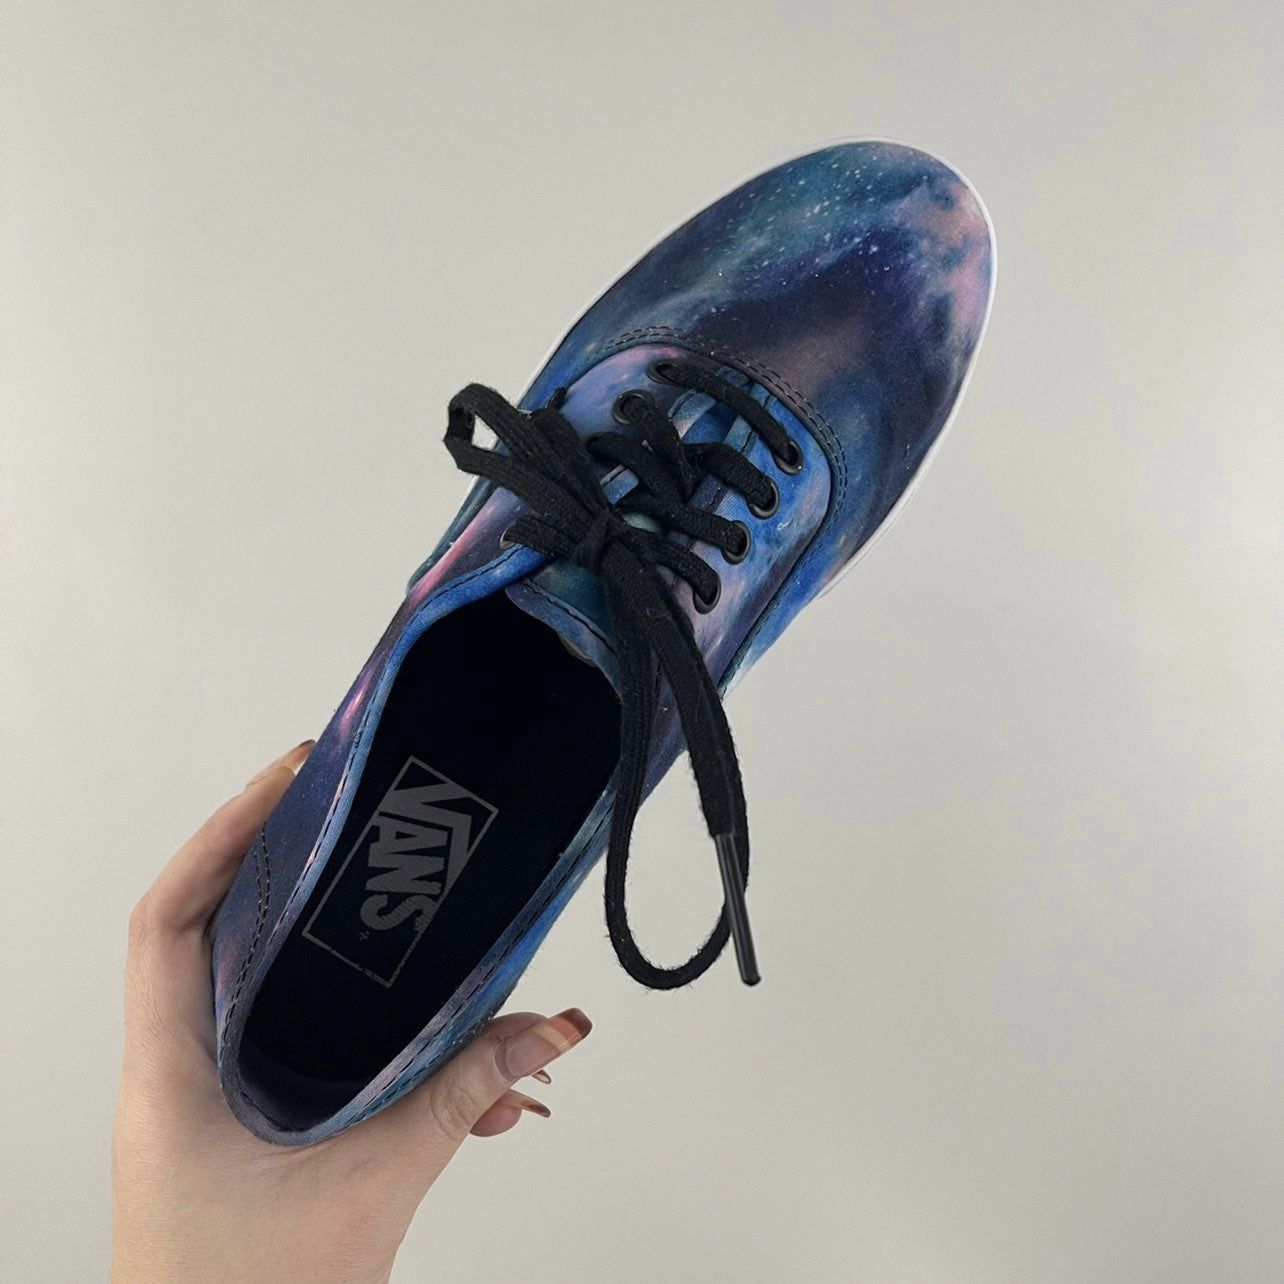 VANS Authentic Lo Pro Purple Blue Galaxy Print Sneakers